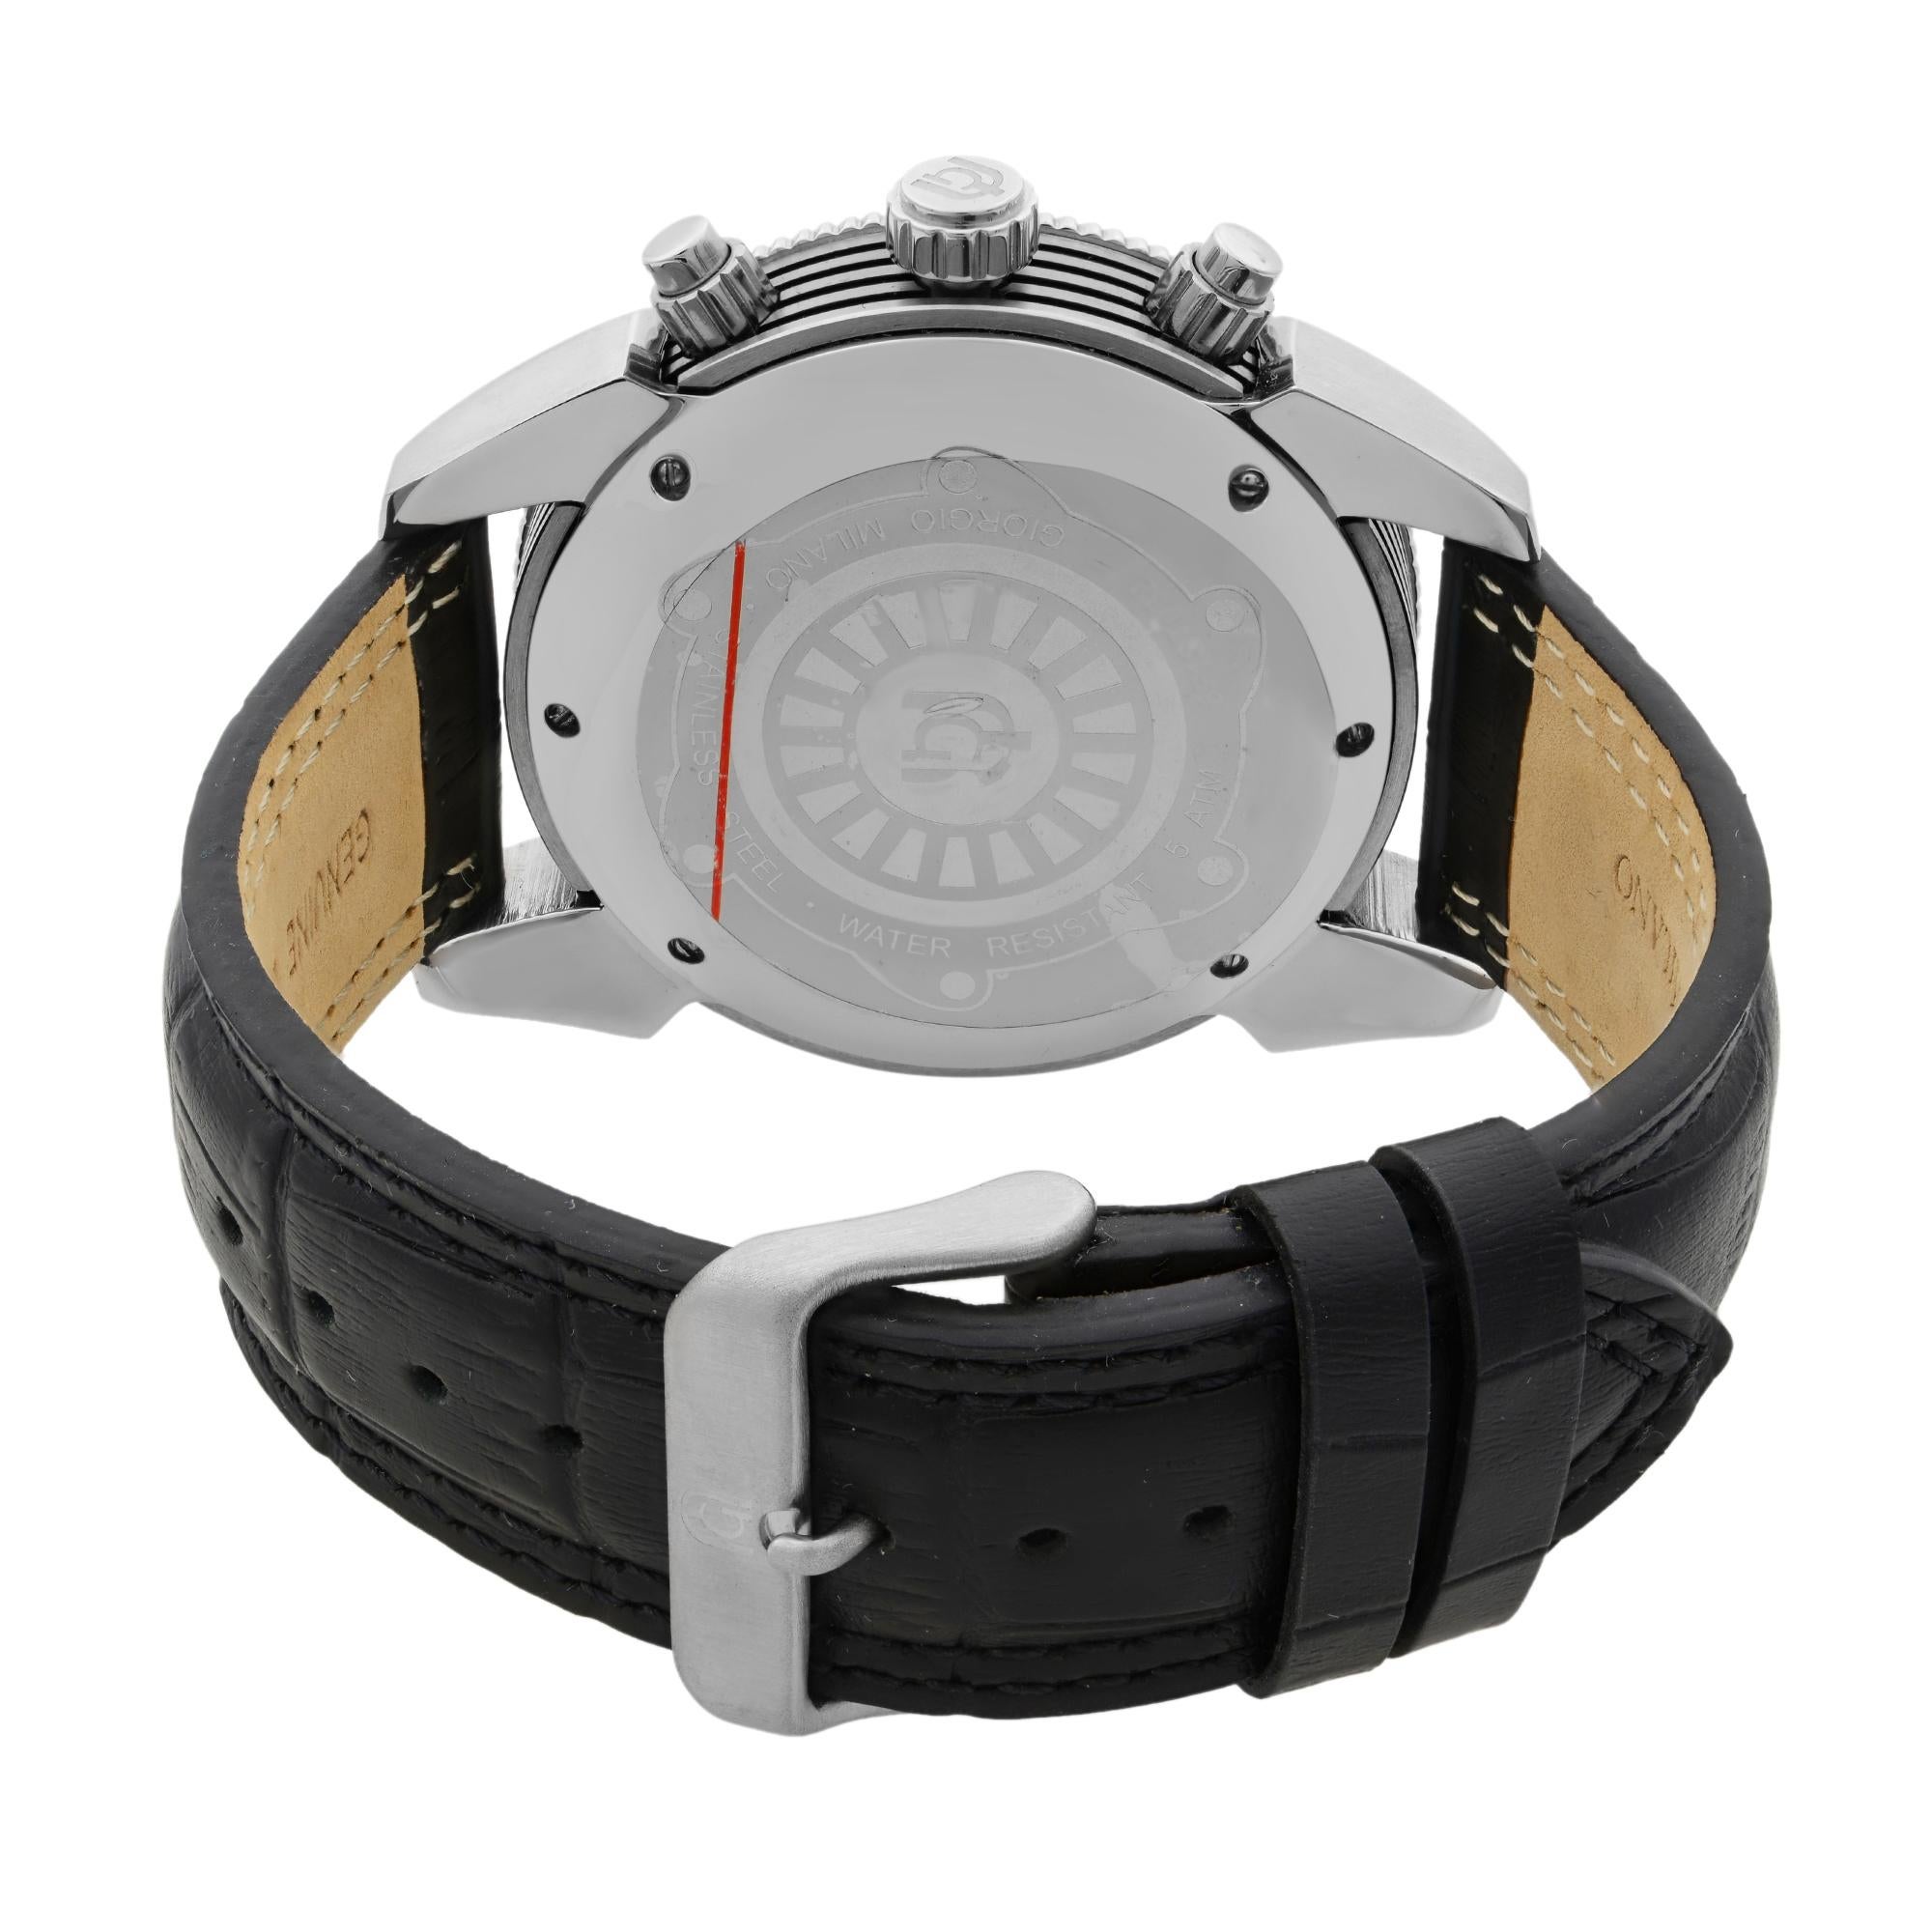 Giorgio Milano Stainless Steel Chronograph Quartz Men's Watch 871ST032 2